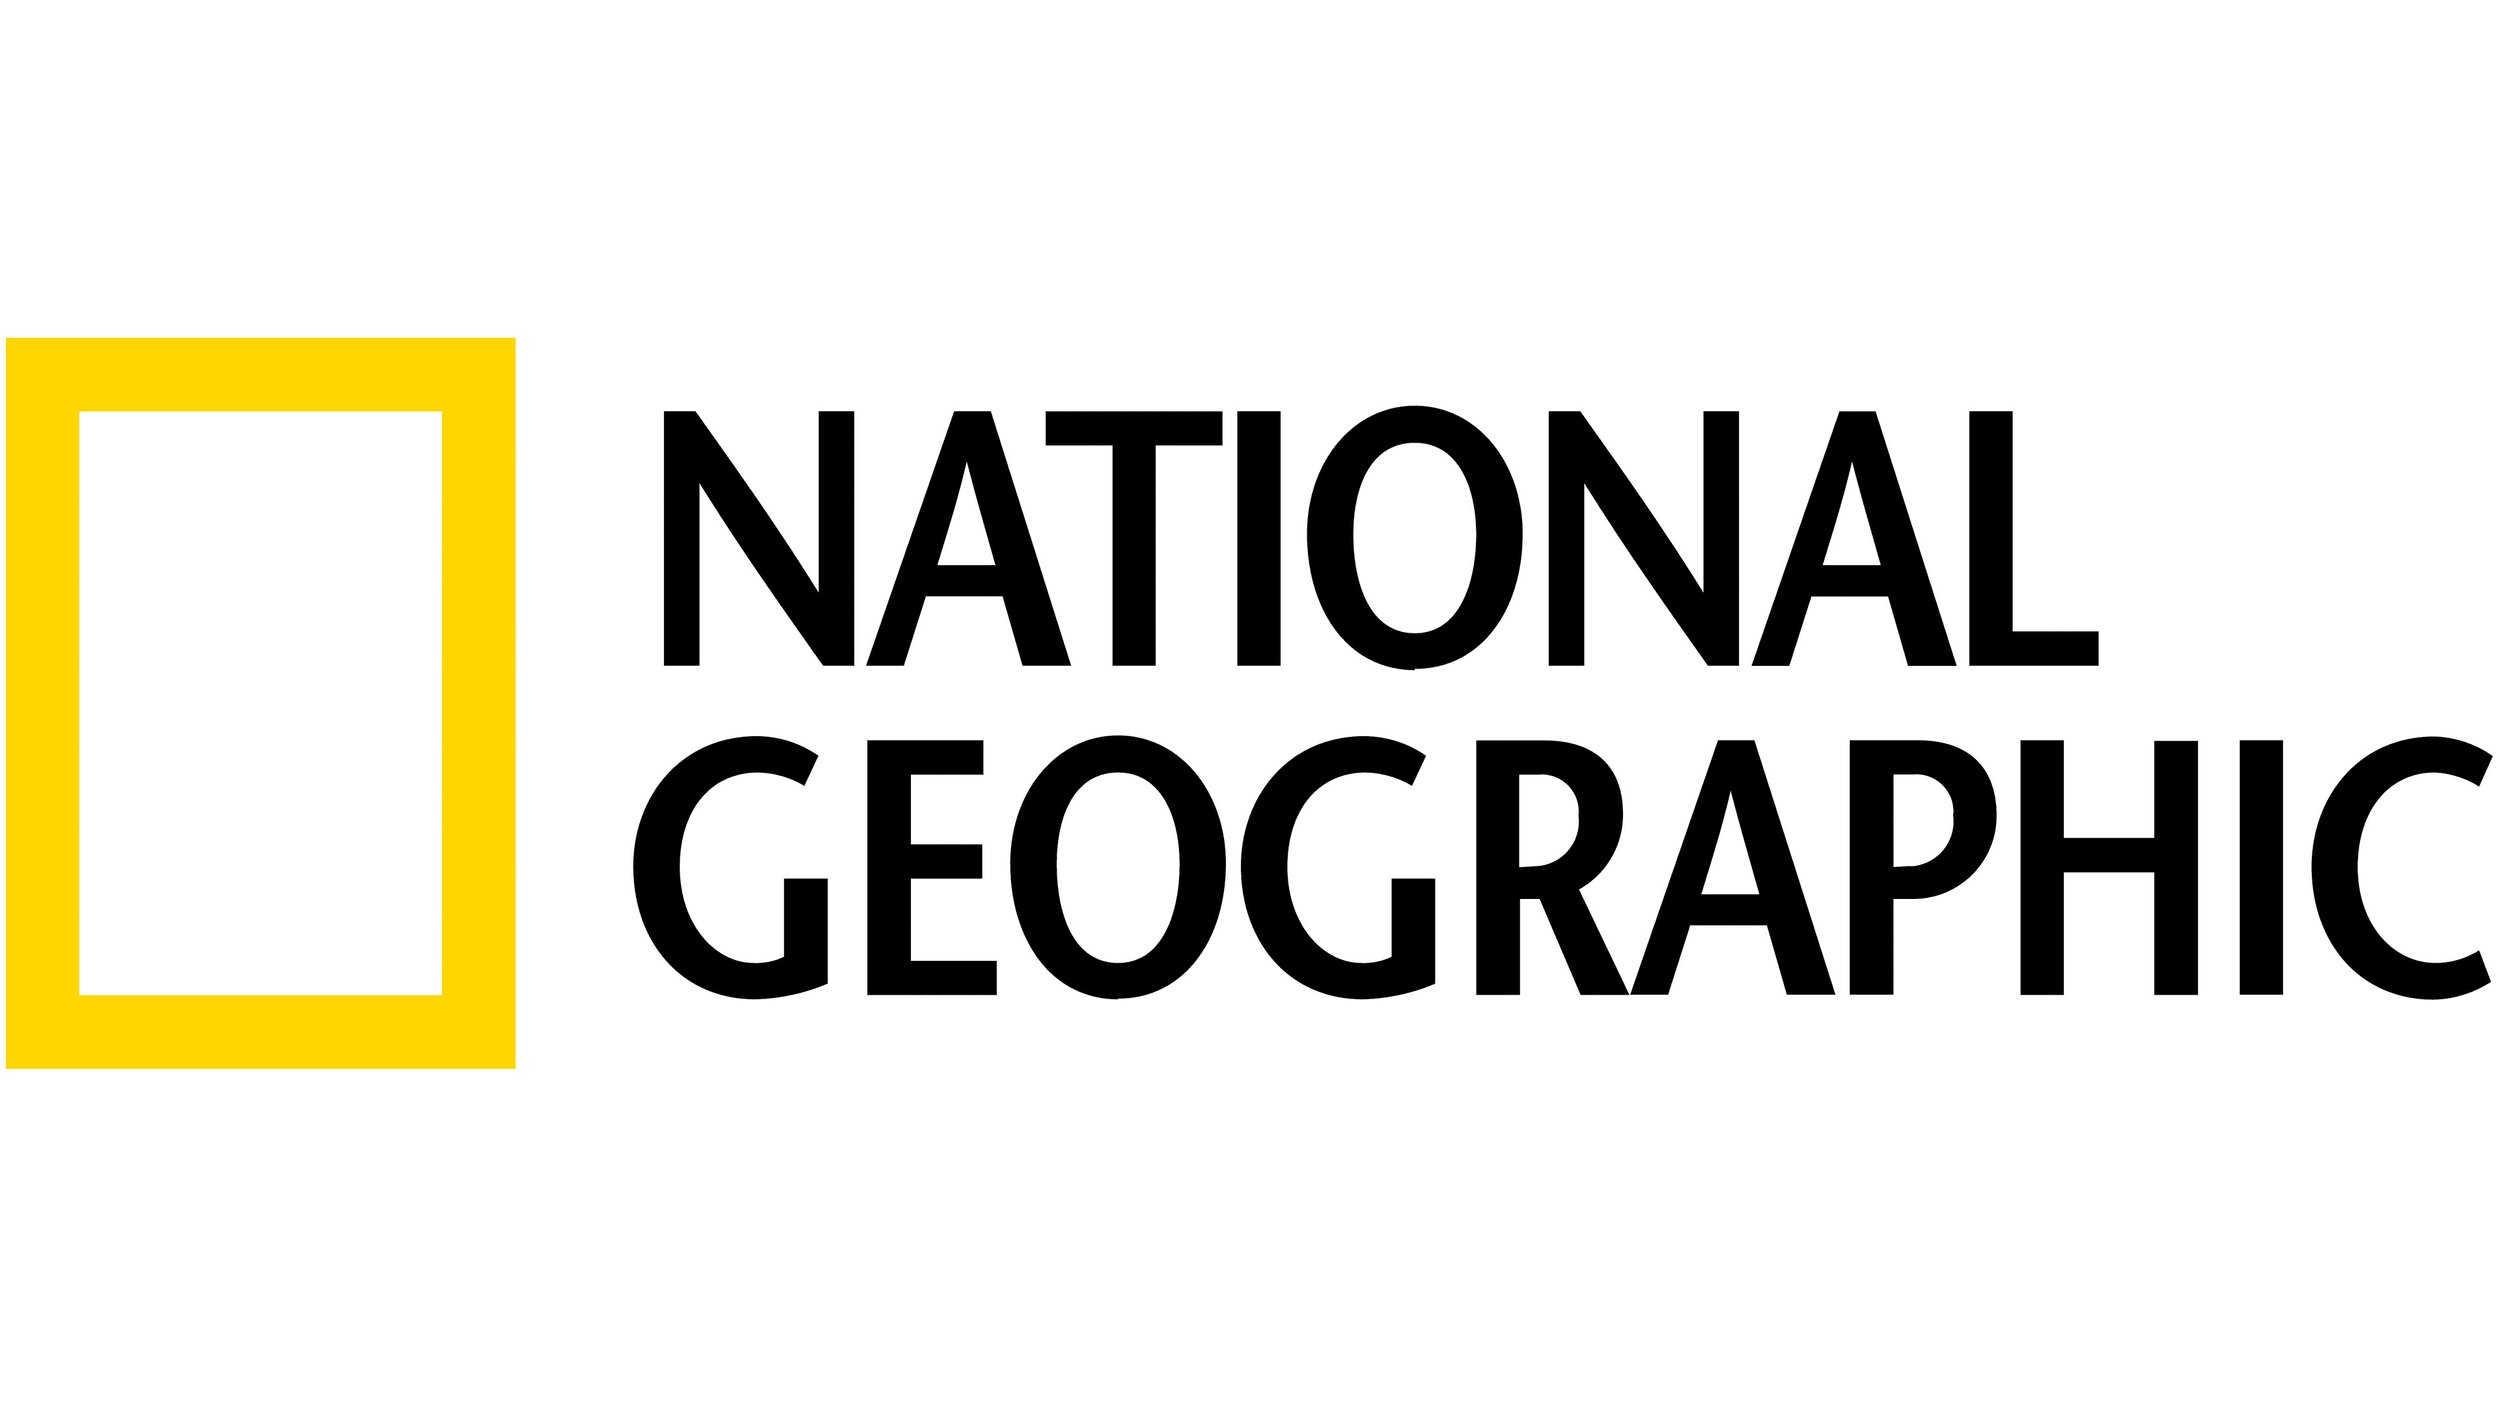 National-Geographic-logo.jpg